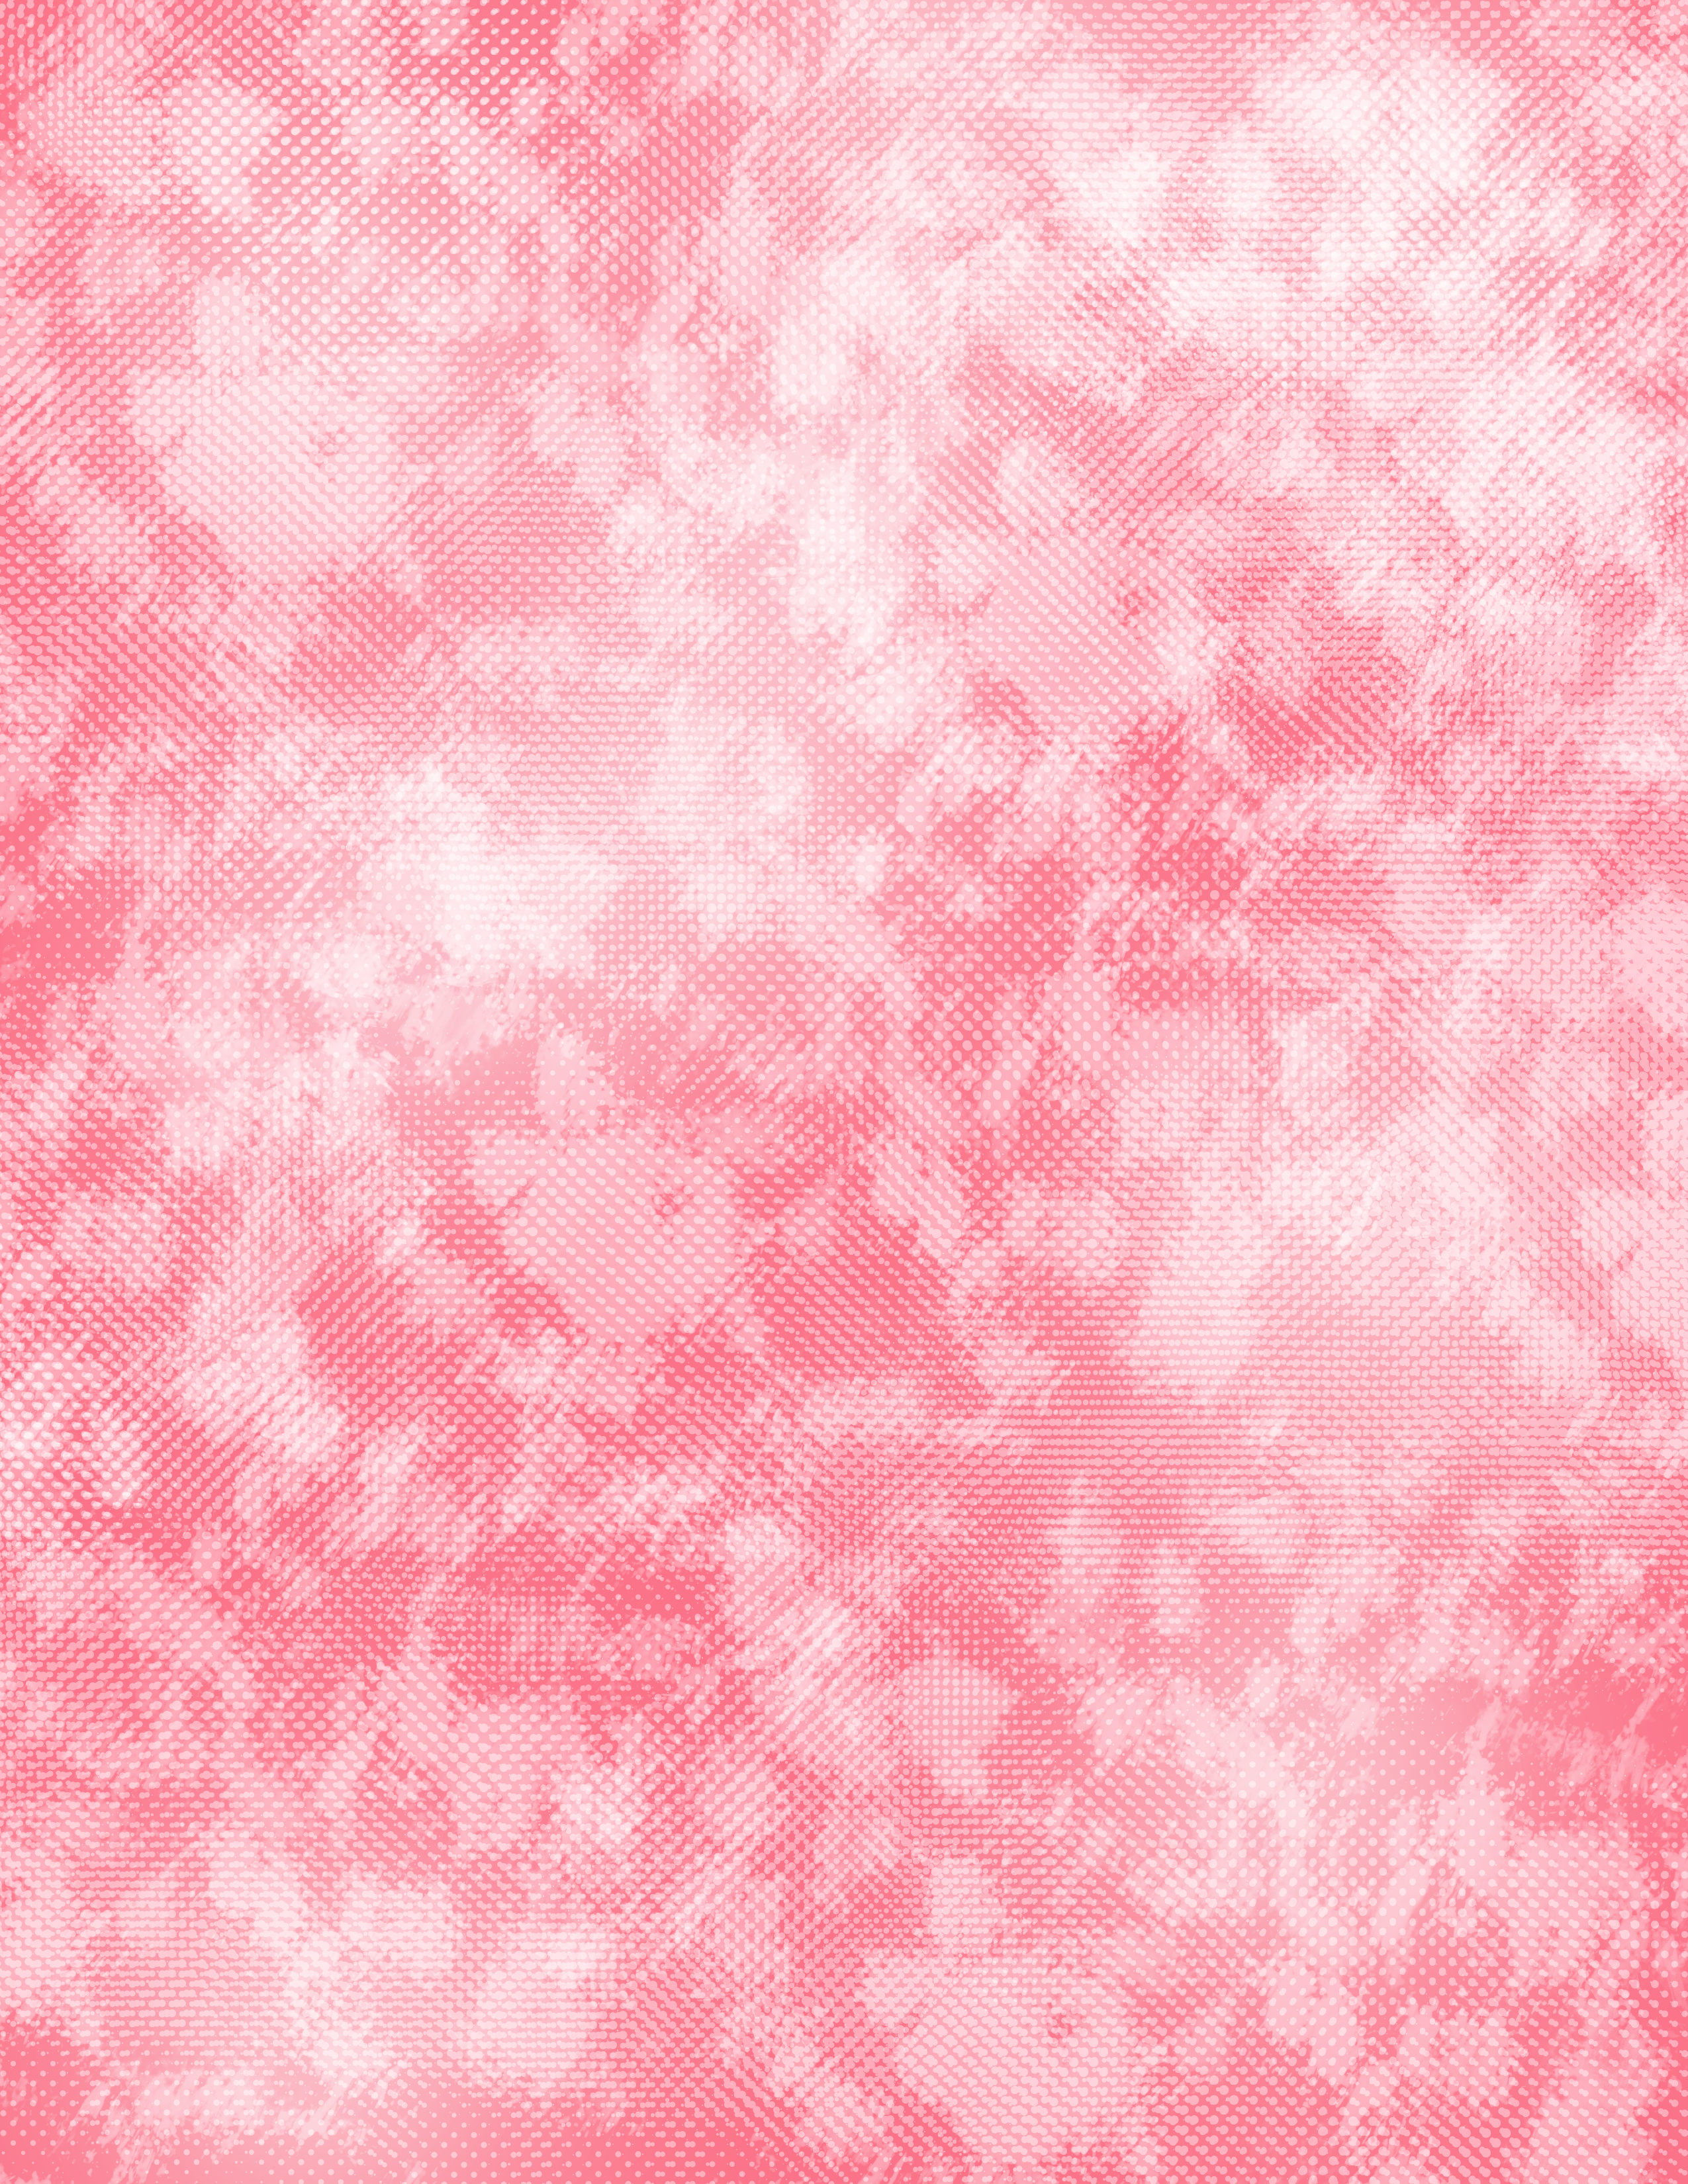 Pink Texture 2 by girlgonegrey on DeviantArt